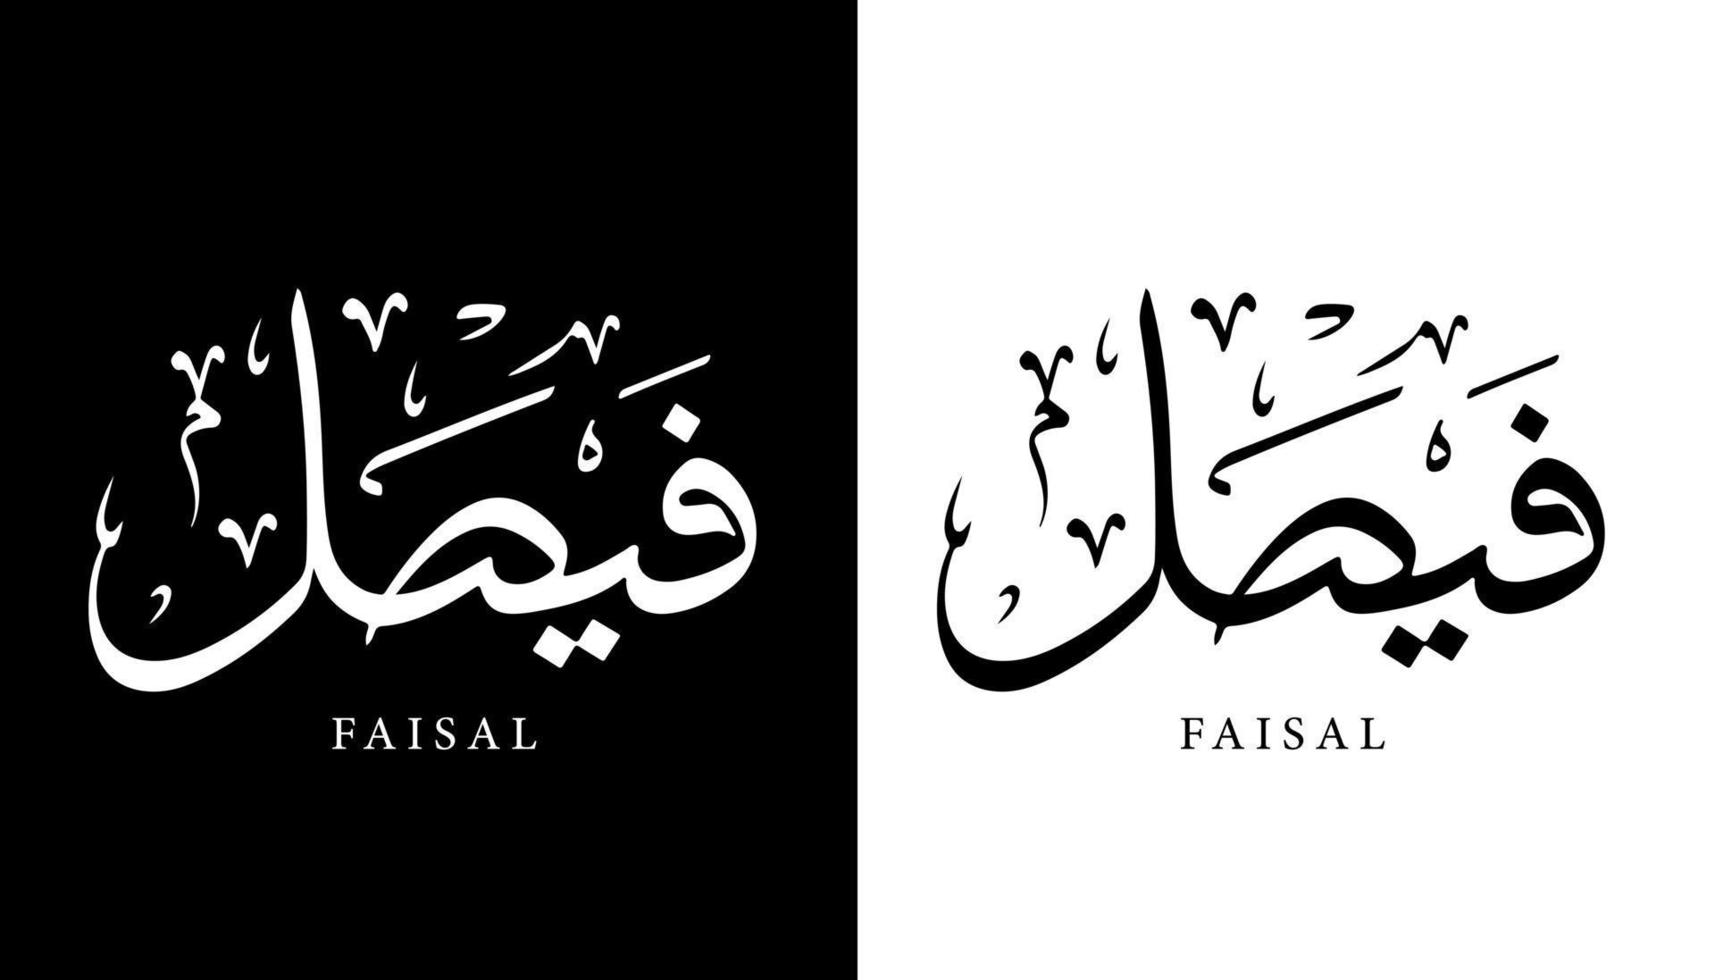 nombre de caligrafía árabe traducido 'faisal' letras árabes alfabeto fuente letras islámicas logo vector ilustración